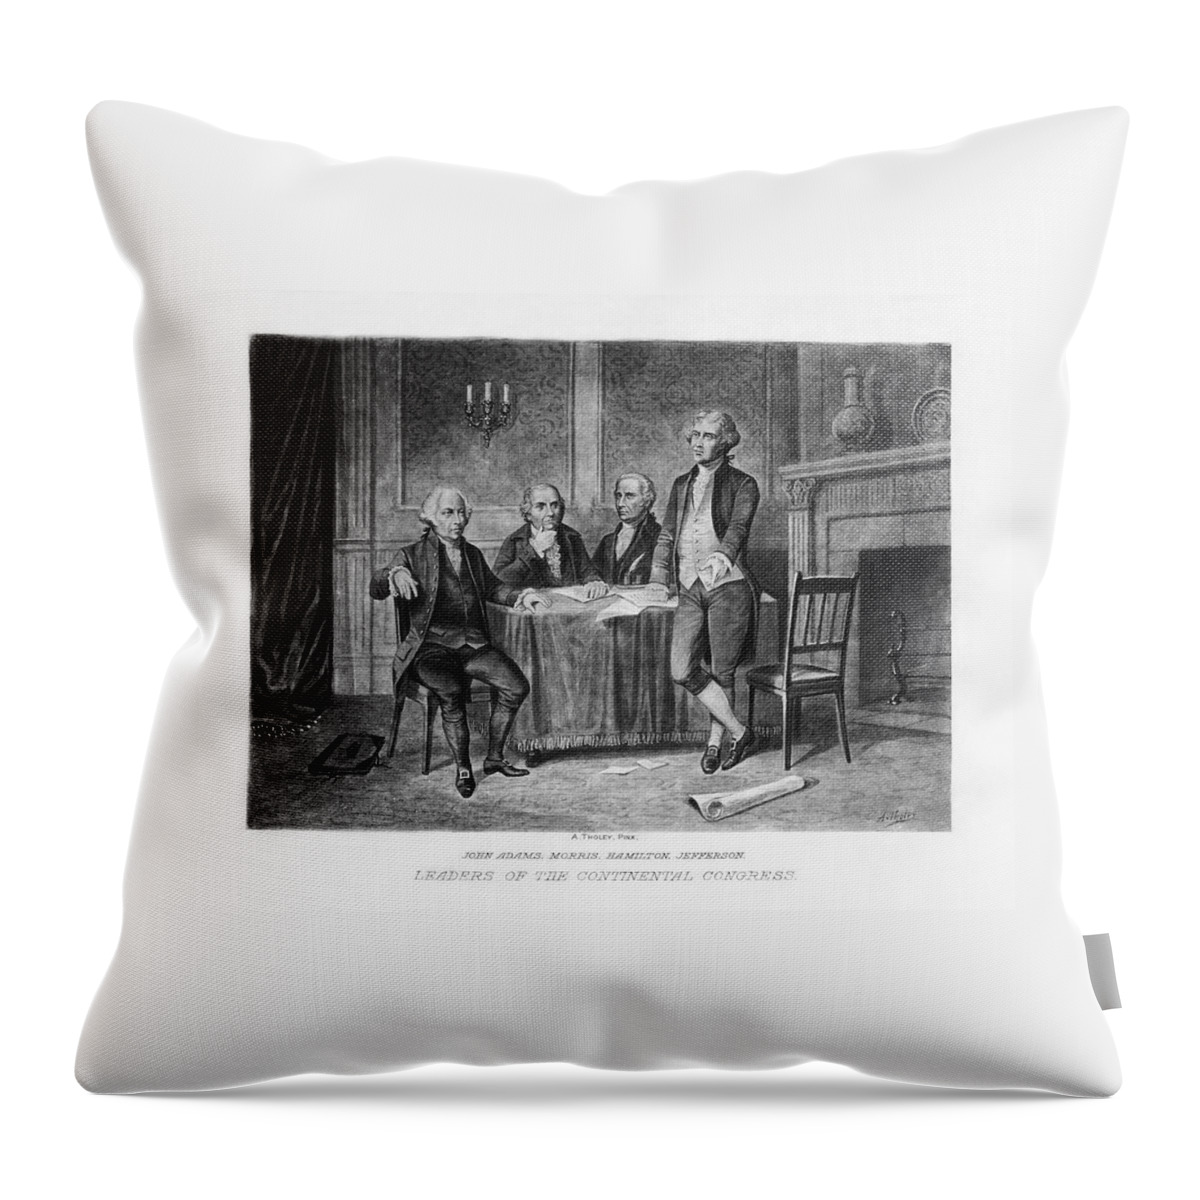 Continental Congress Throw Pillow featuring the drawing Leaders of the Continental Congress - John Adams - Morris - Hamilton - Jefferson by War Is Hell Store